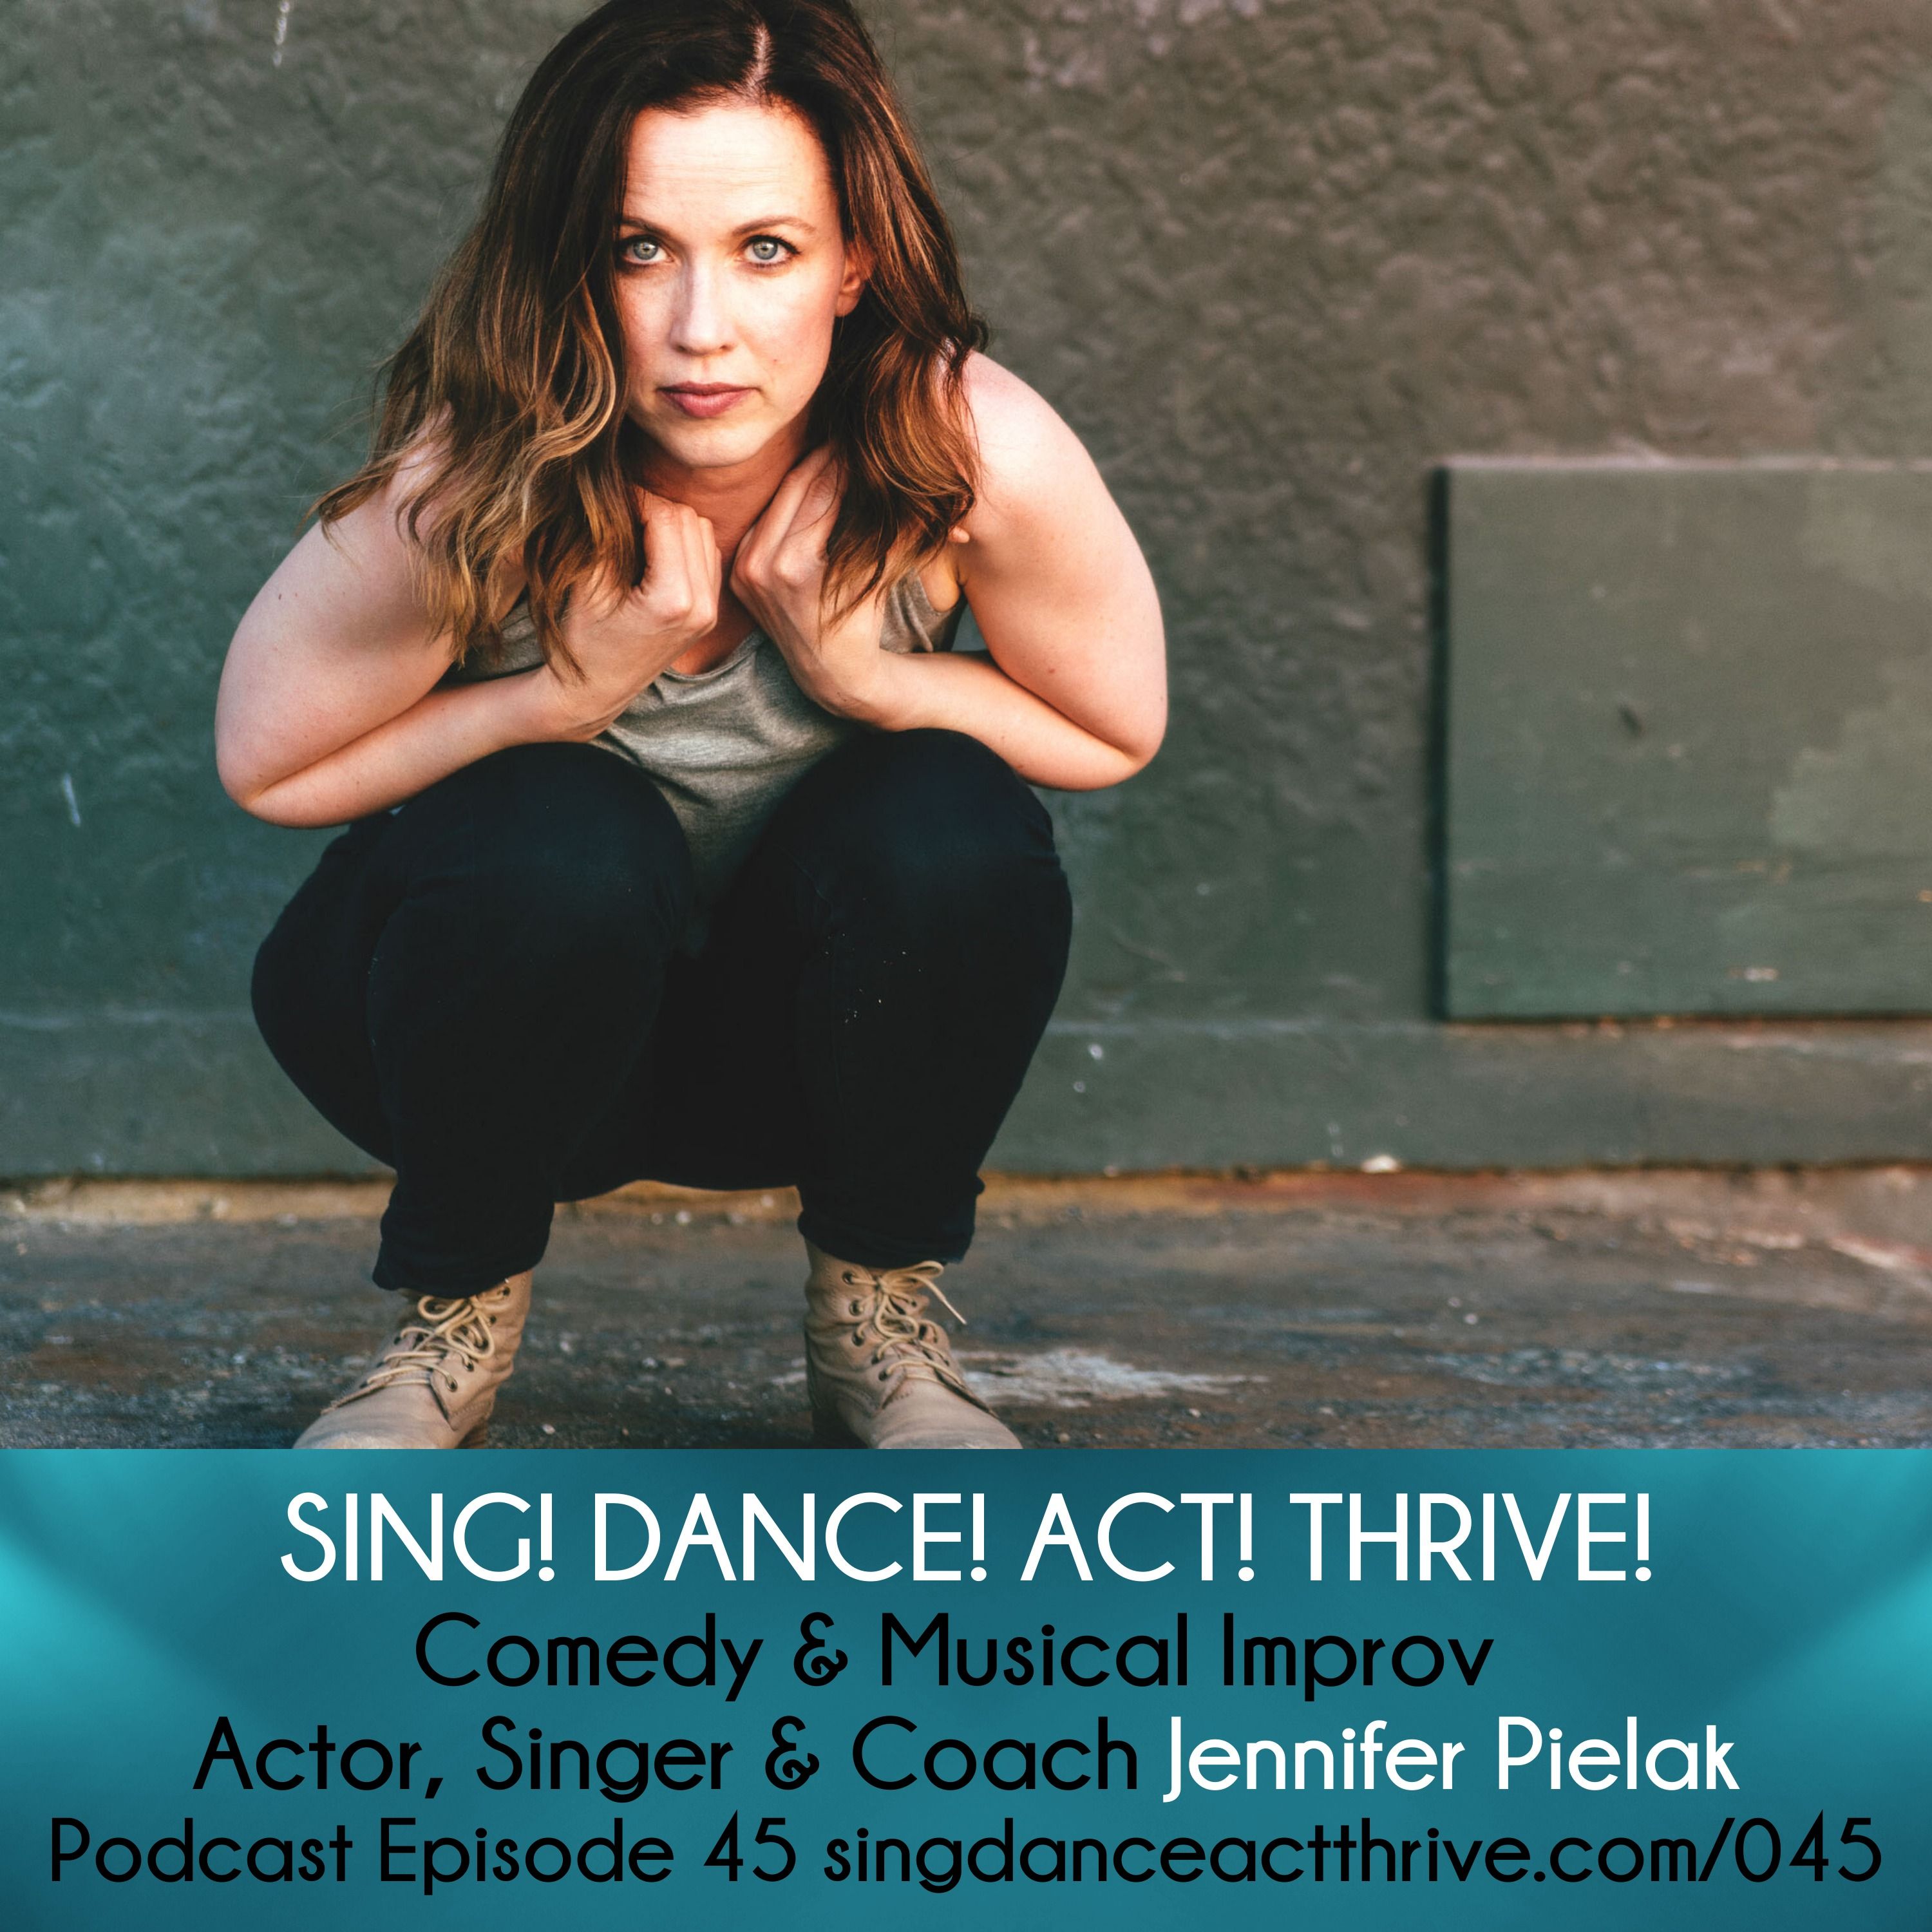 Jennifer Pielak: Comedy & Musical Improv Actor, Singer & Coach